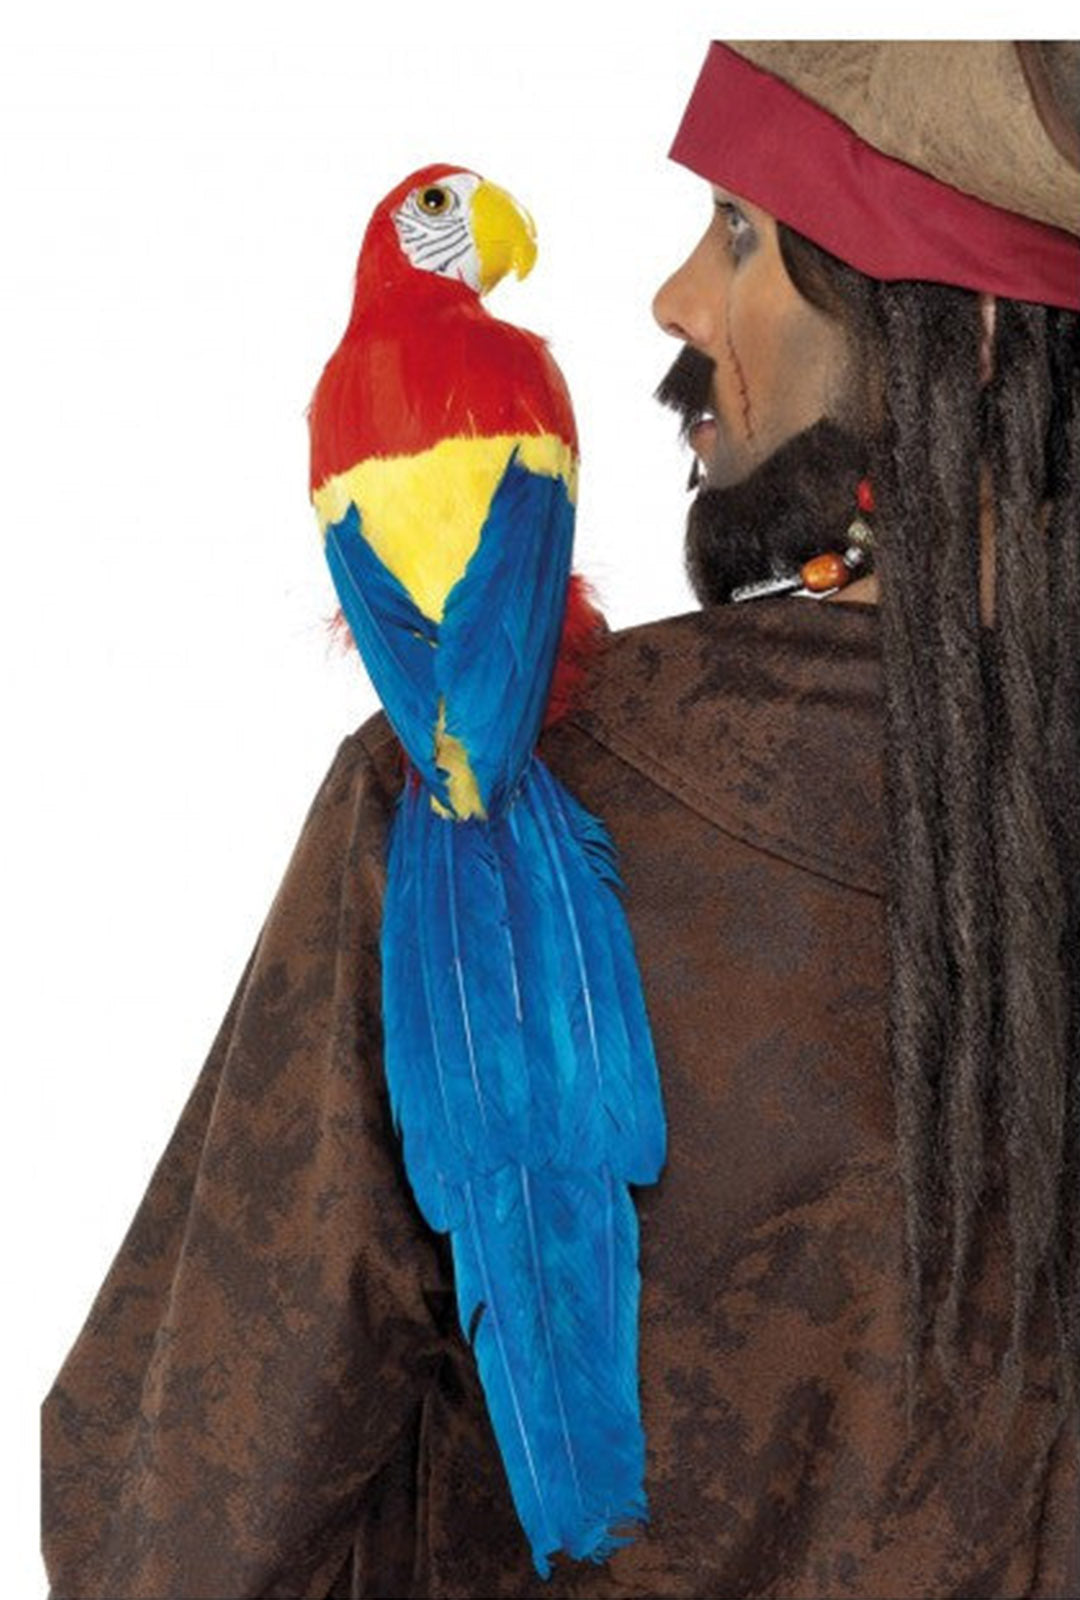 Life Like Fake Pirate Parrot